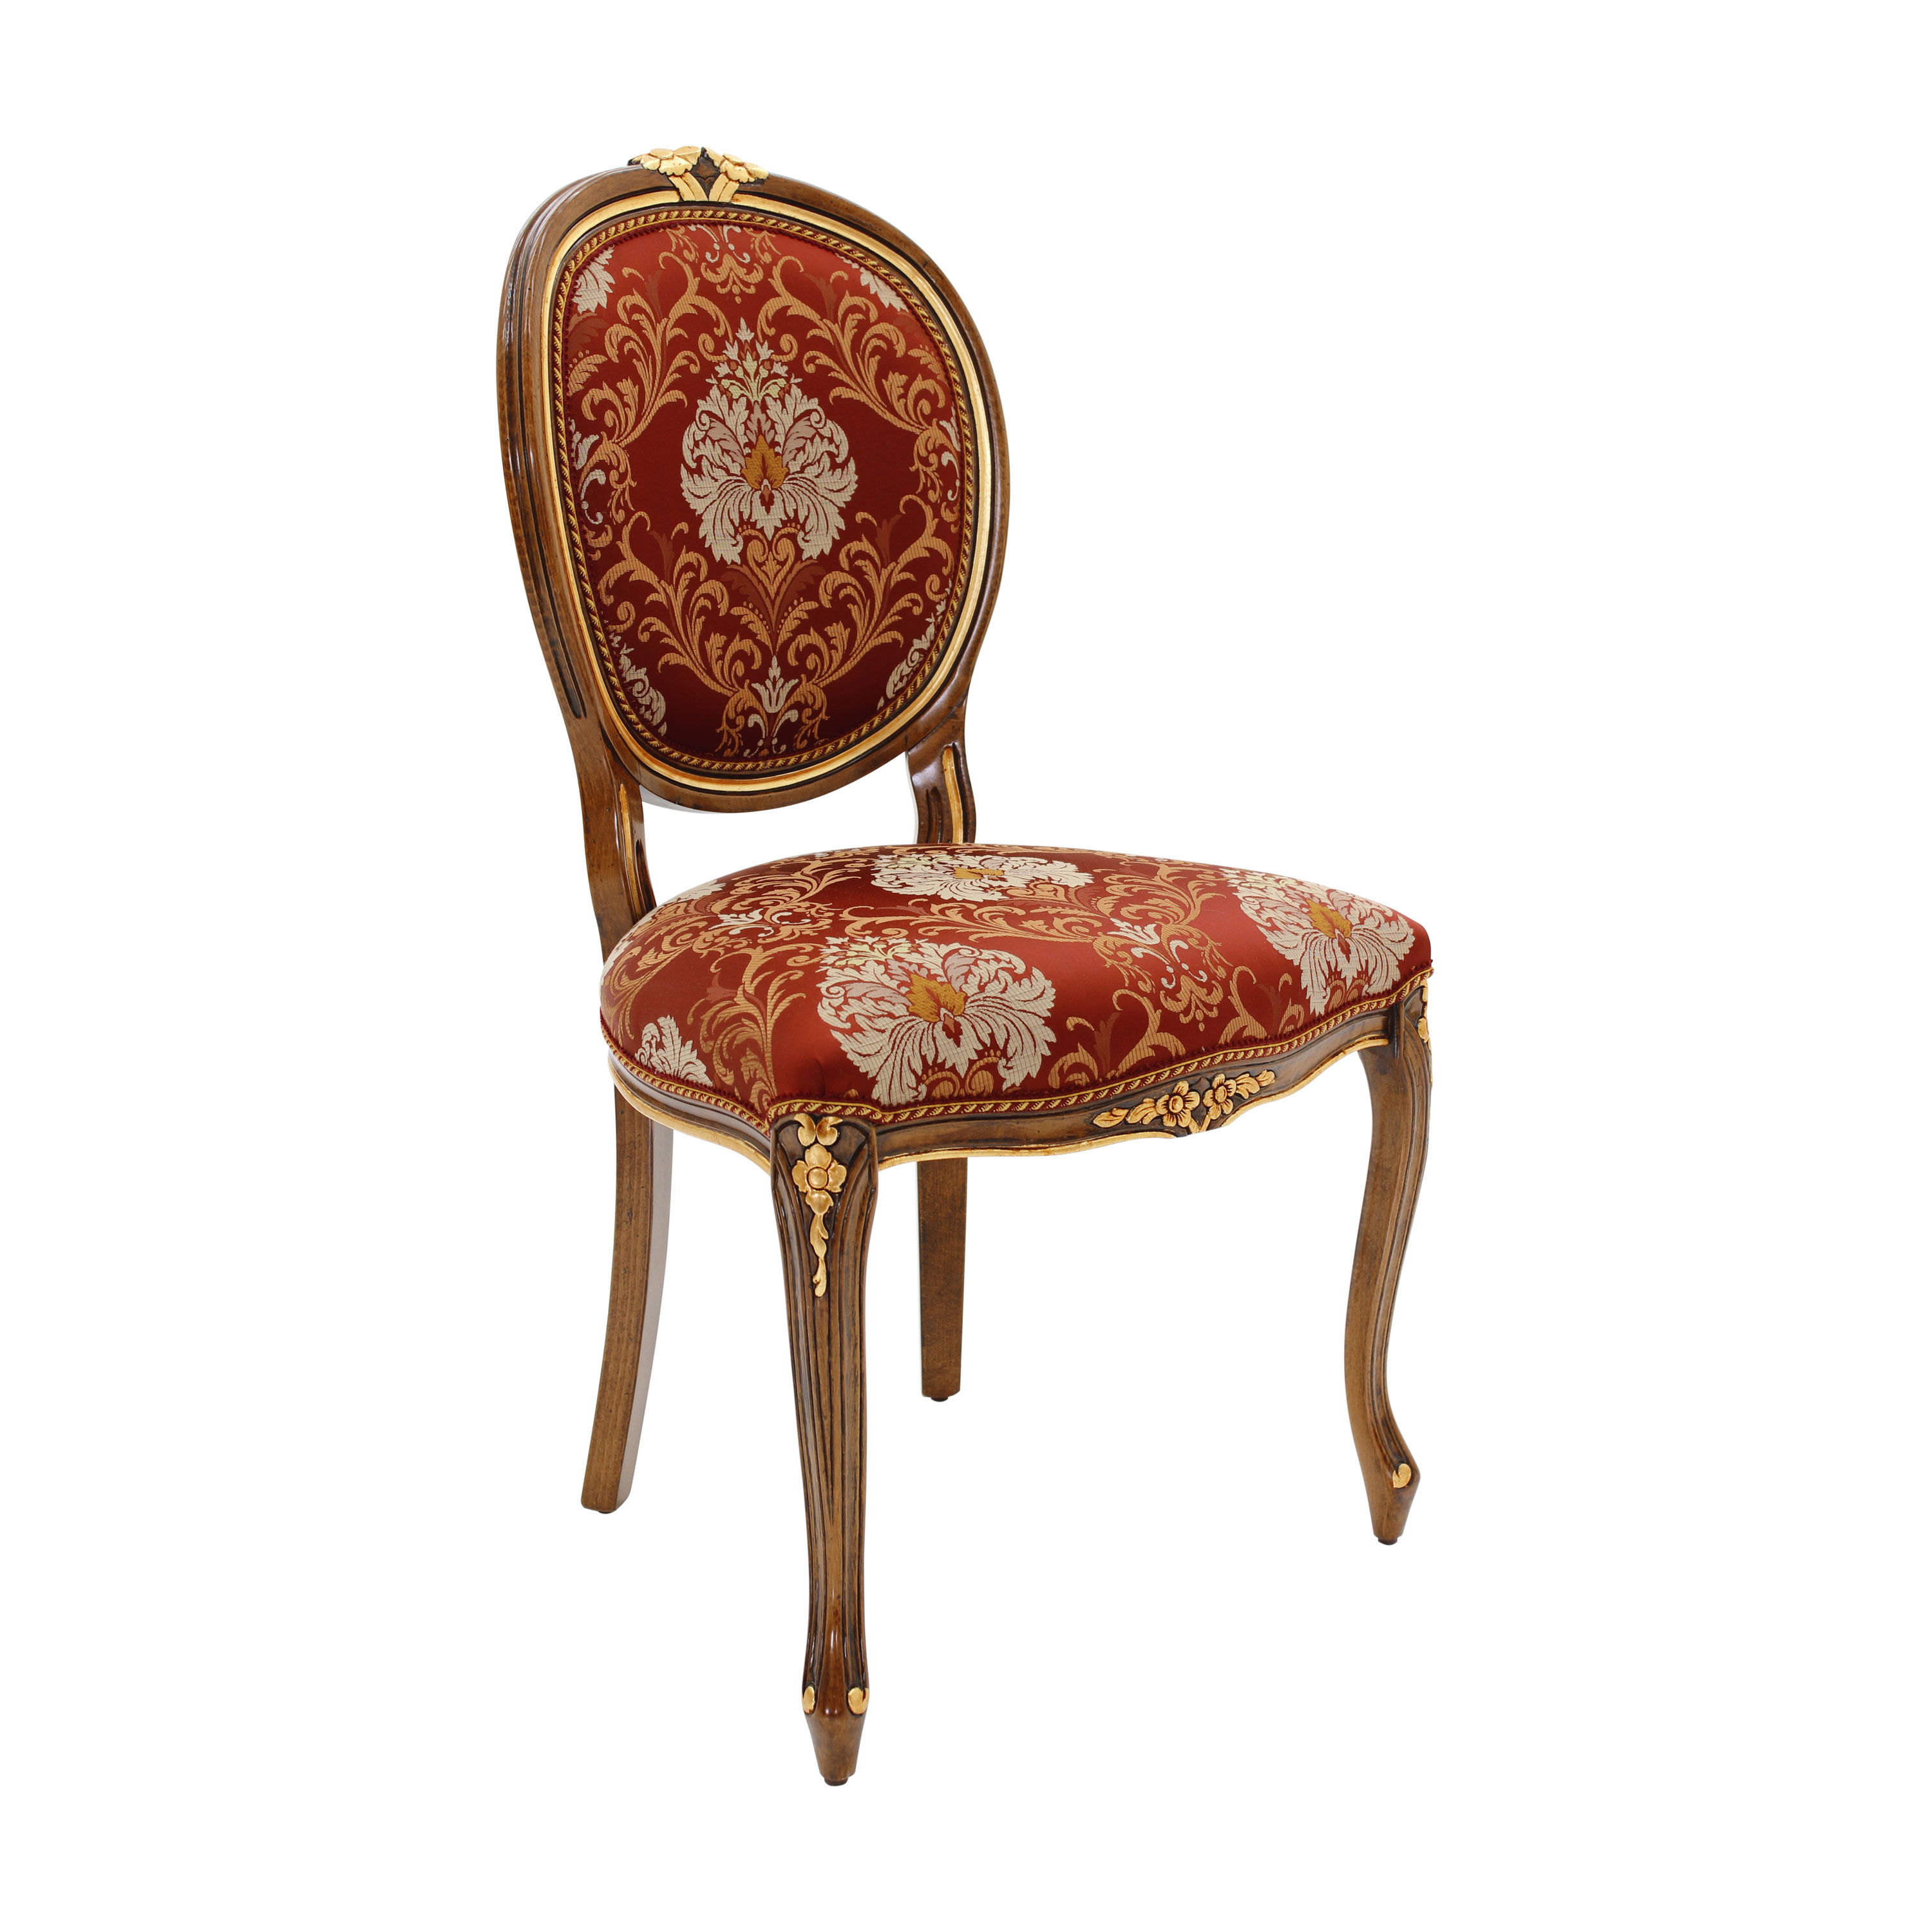 Uitgestorven Inspireren wol Italian Chair KIEV - Classic chair in baroque style